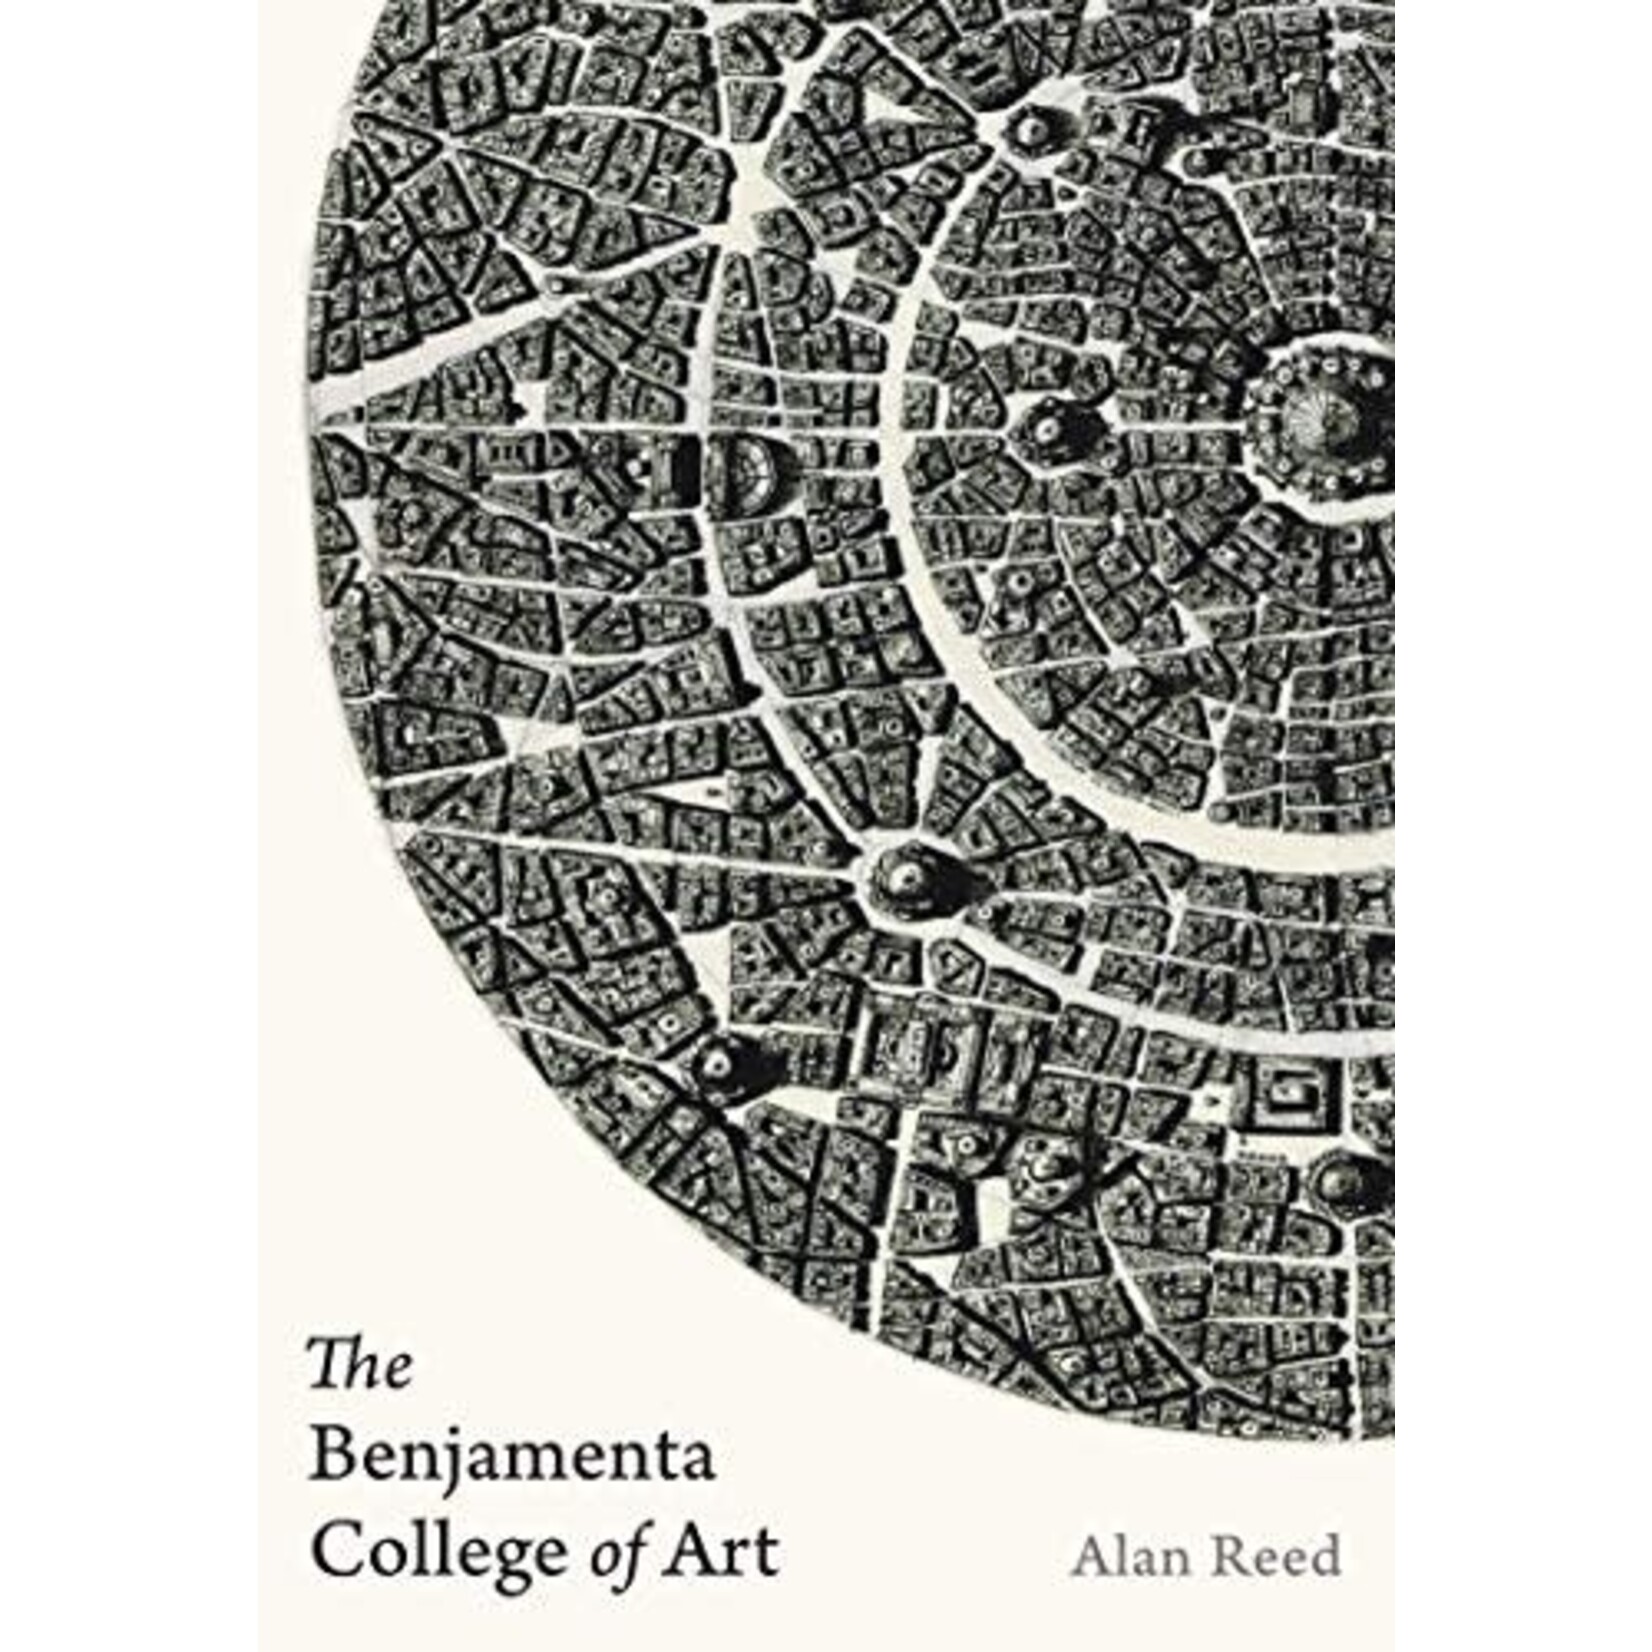 Reed, Alan - The Benjamenta College of Art